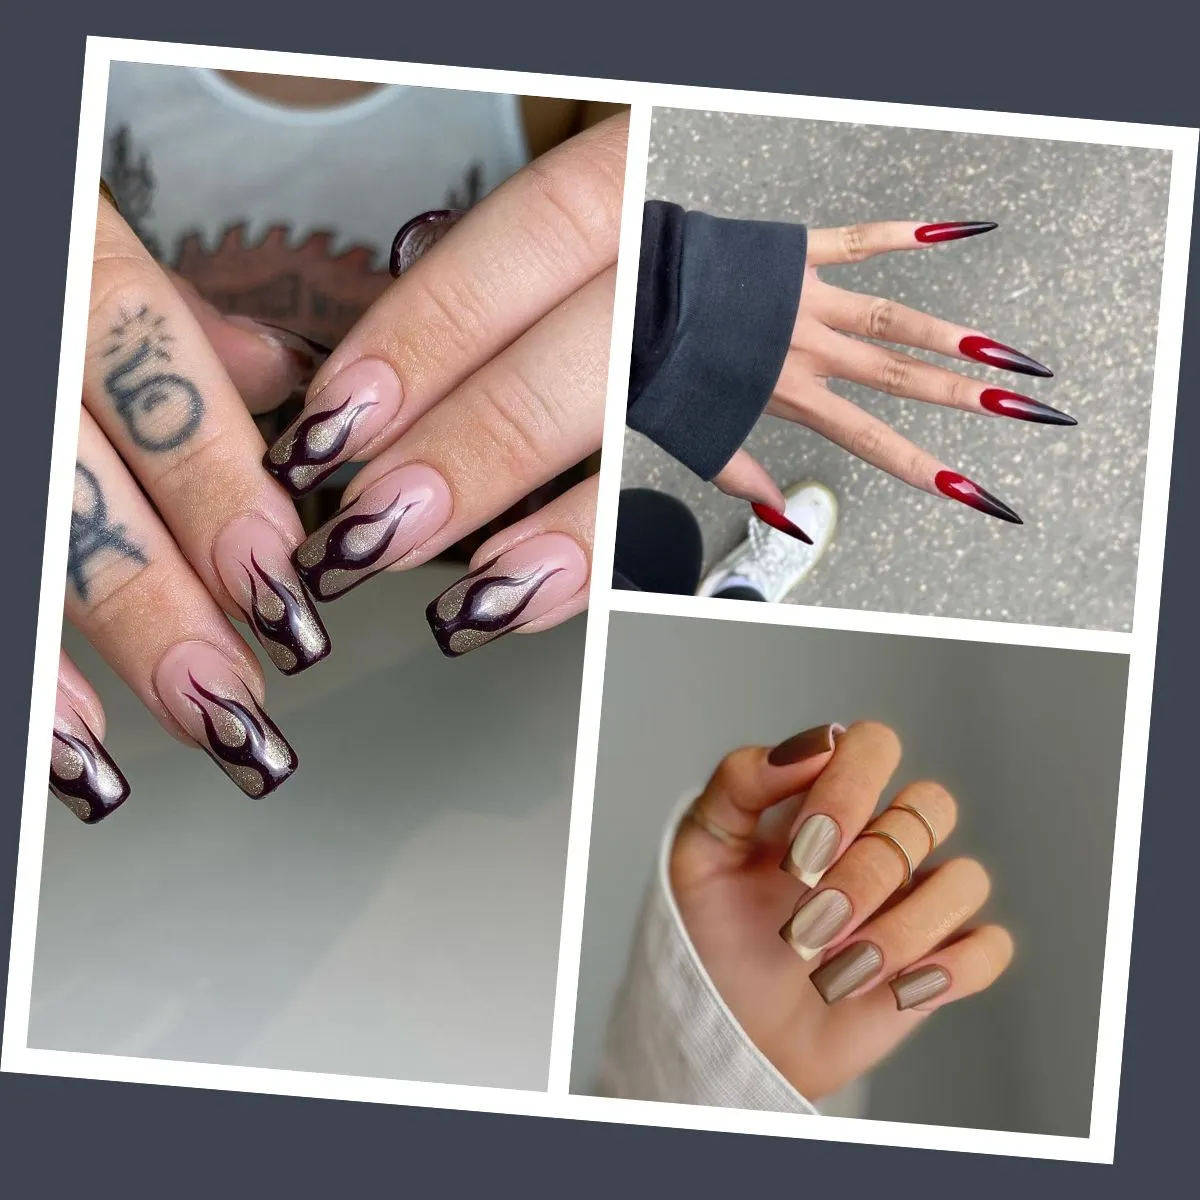 mazotcu1 | Linktree | Gel nails, Ombre acrylic nails, Stylish nails art